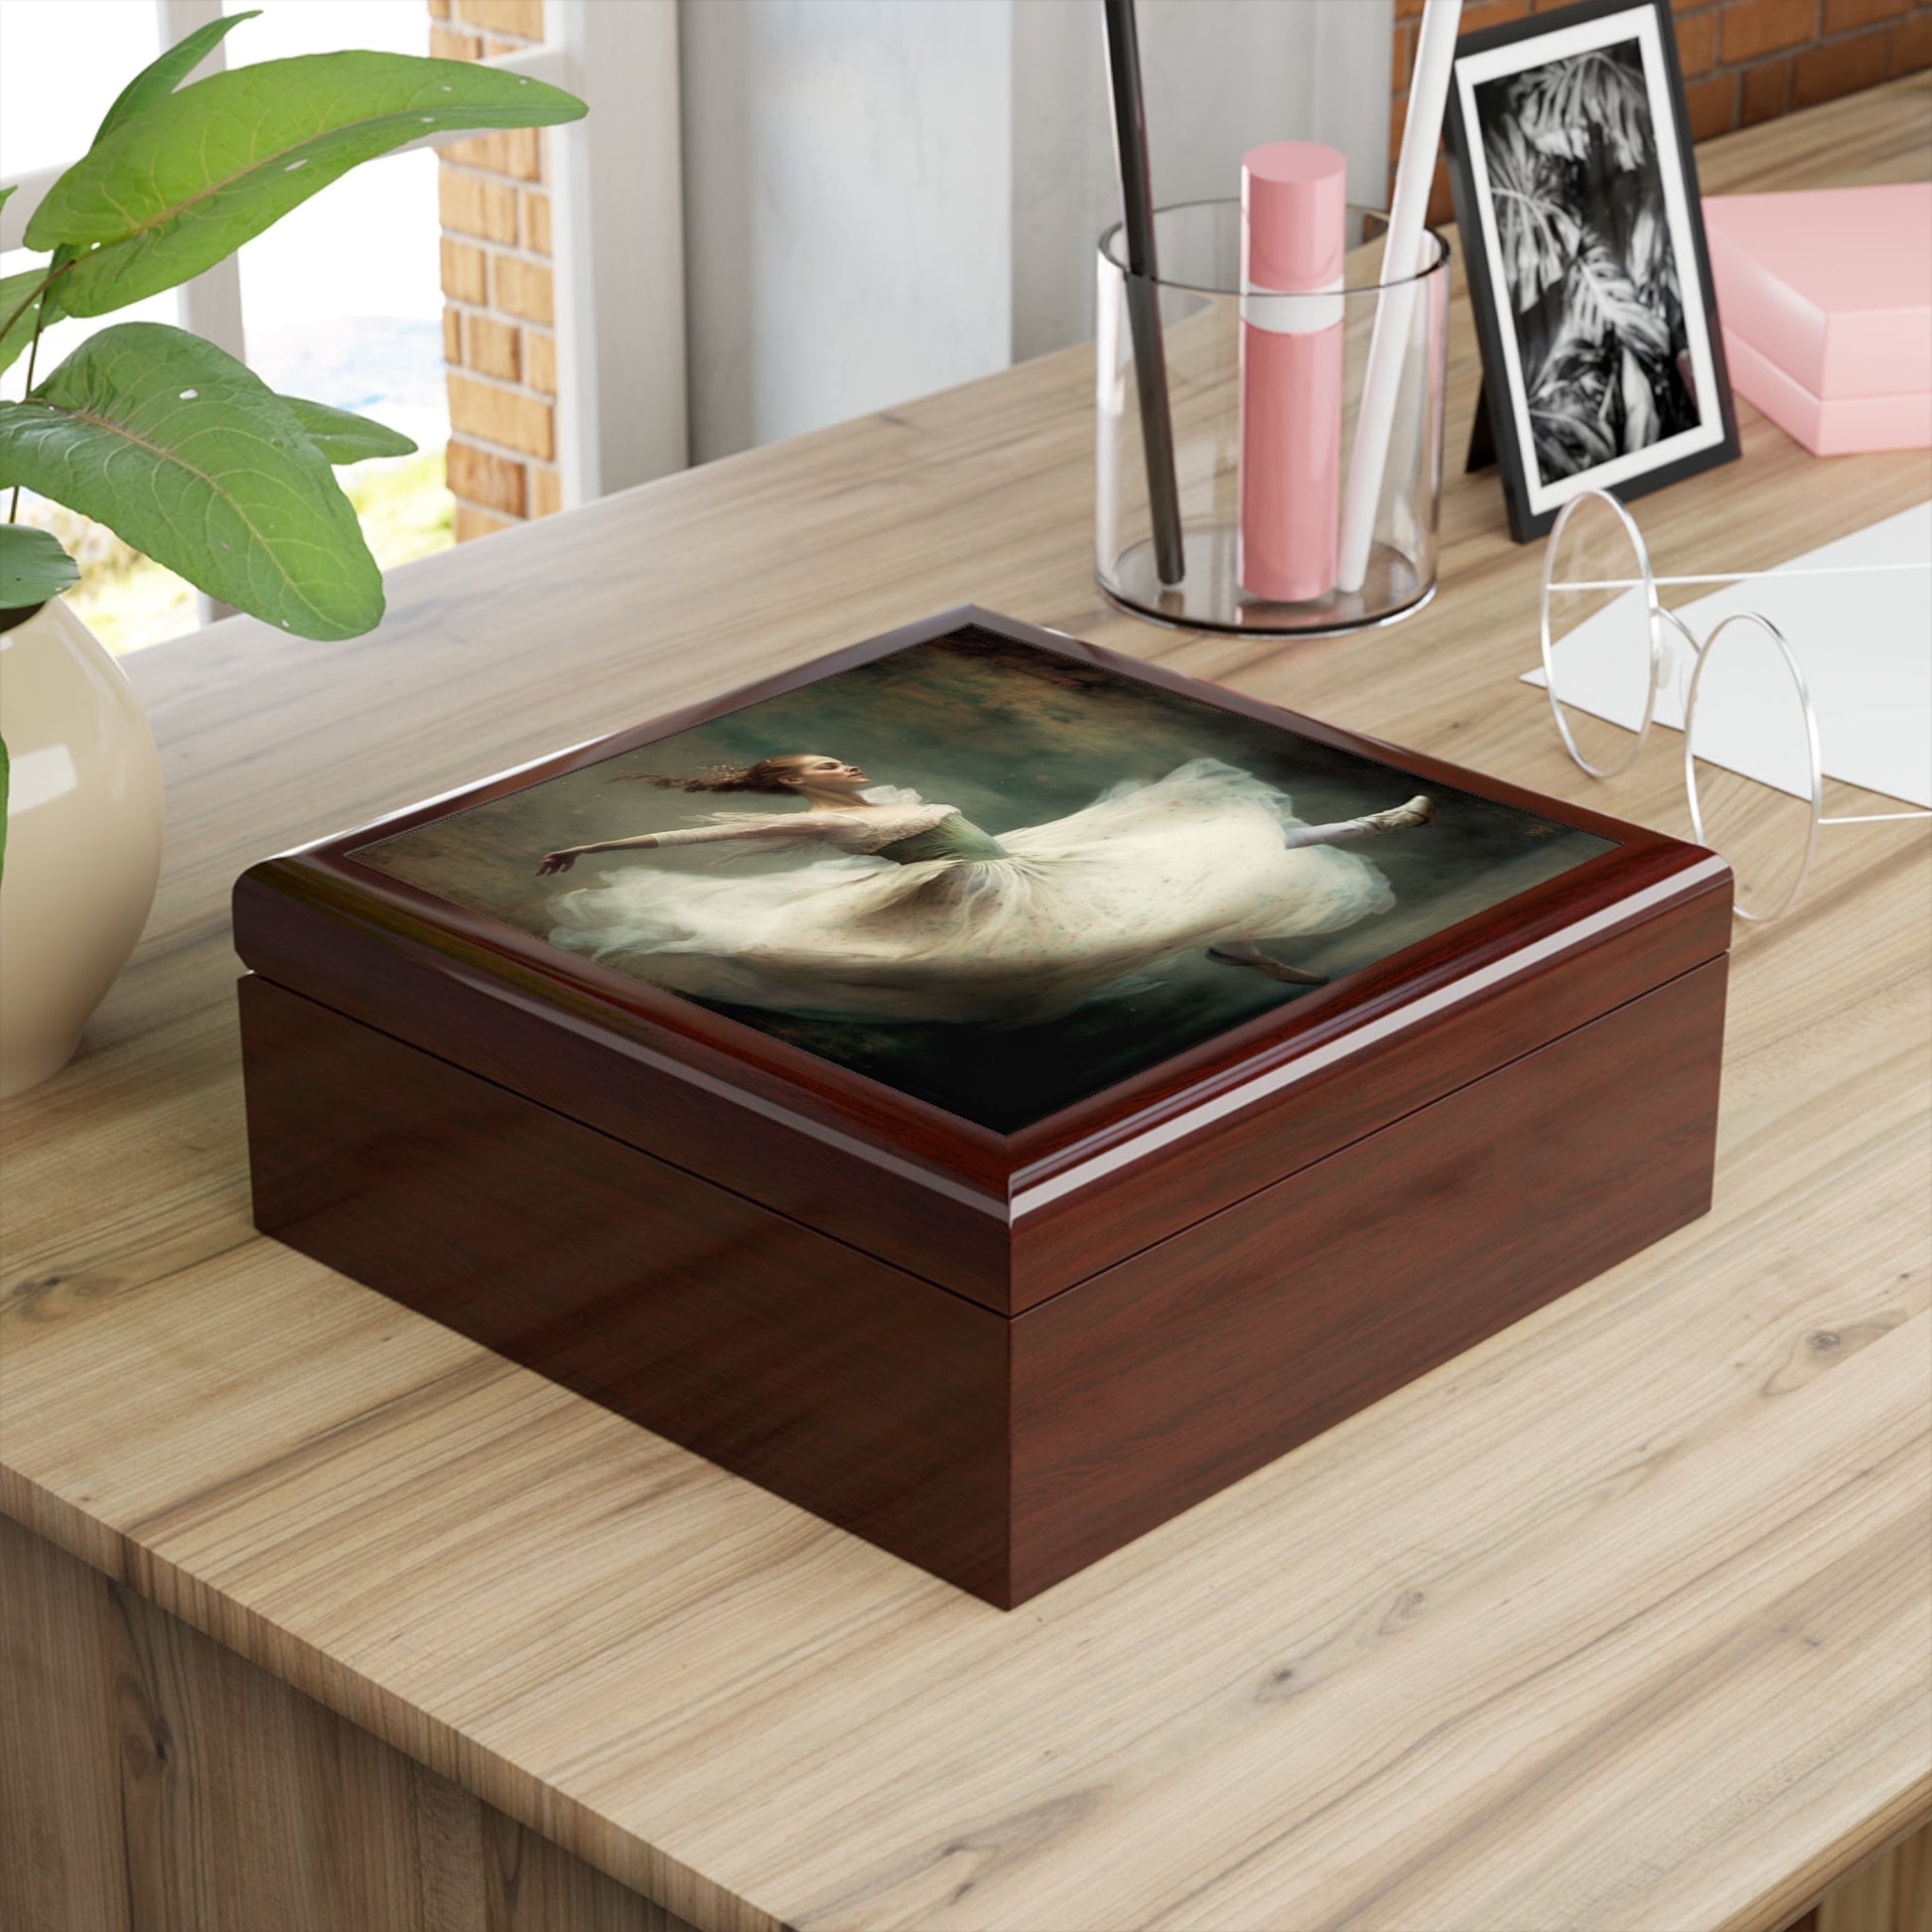 Ballerina Wood Keepsake Jewelry Box with Ceramic Tile Cover